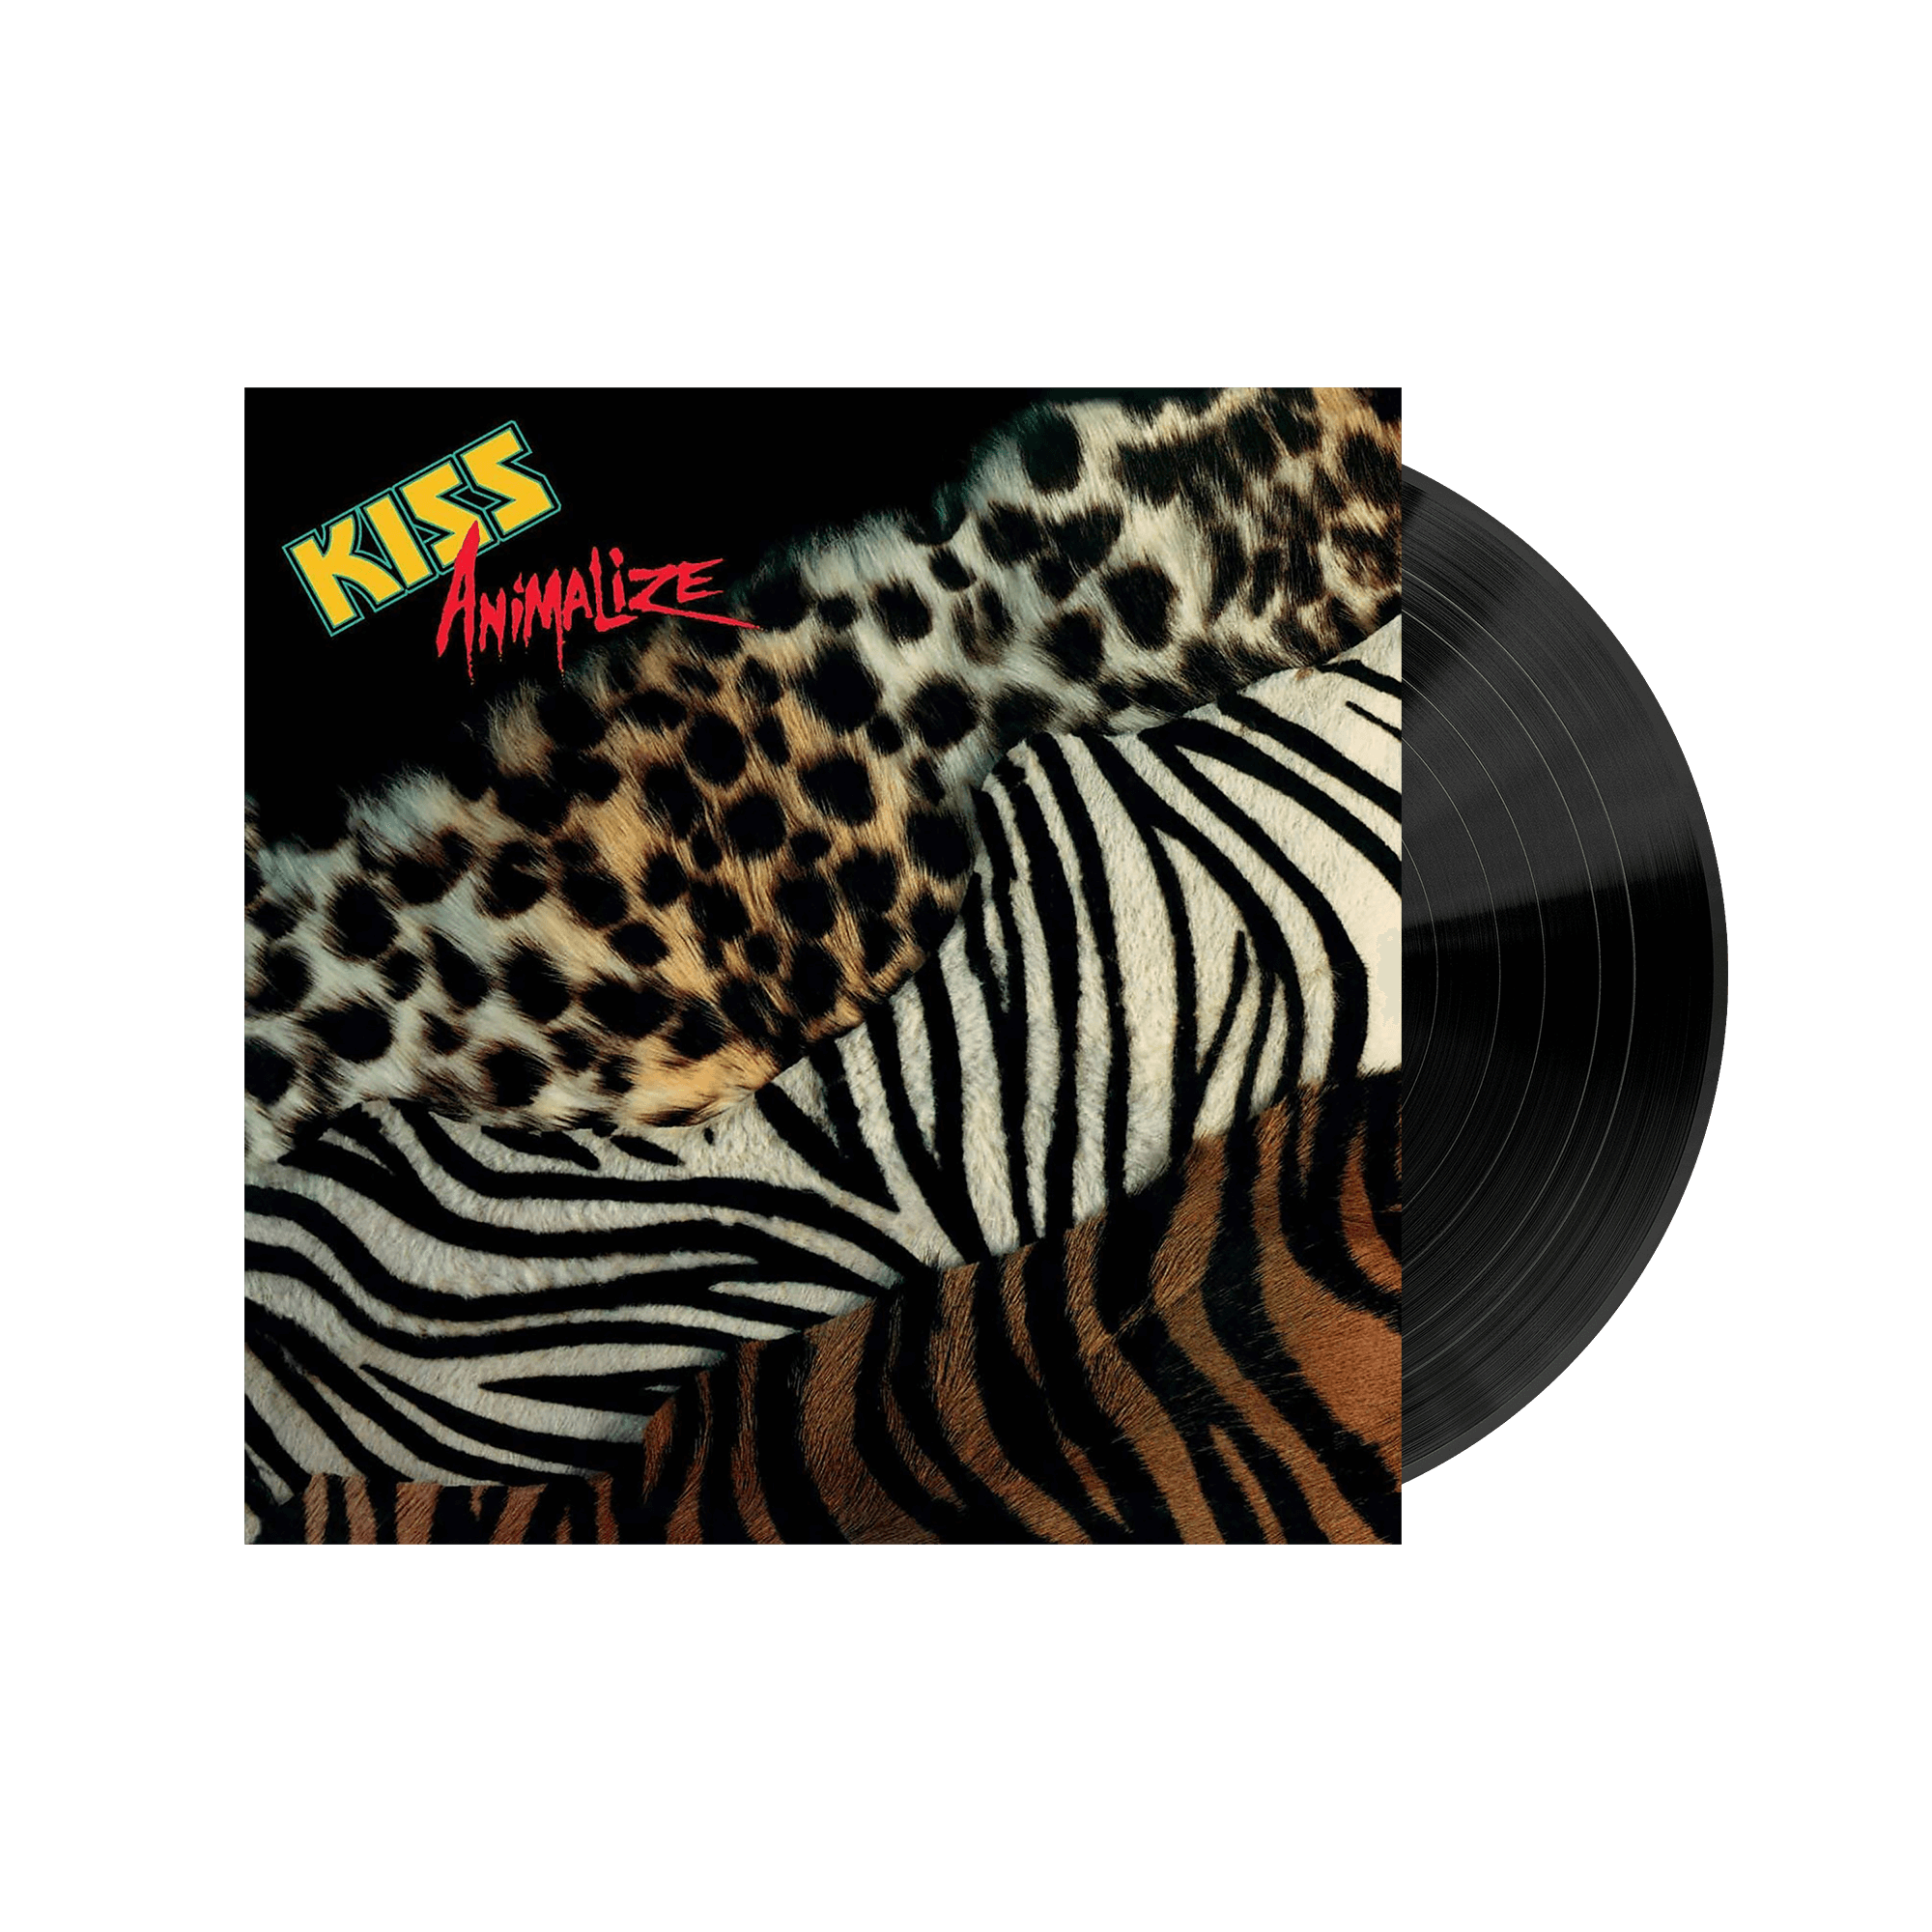 kiss animalize vinyl lp